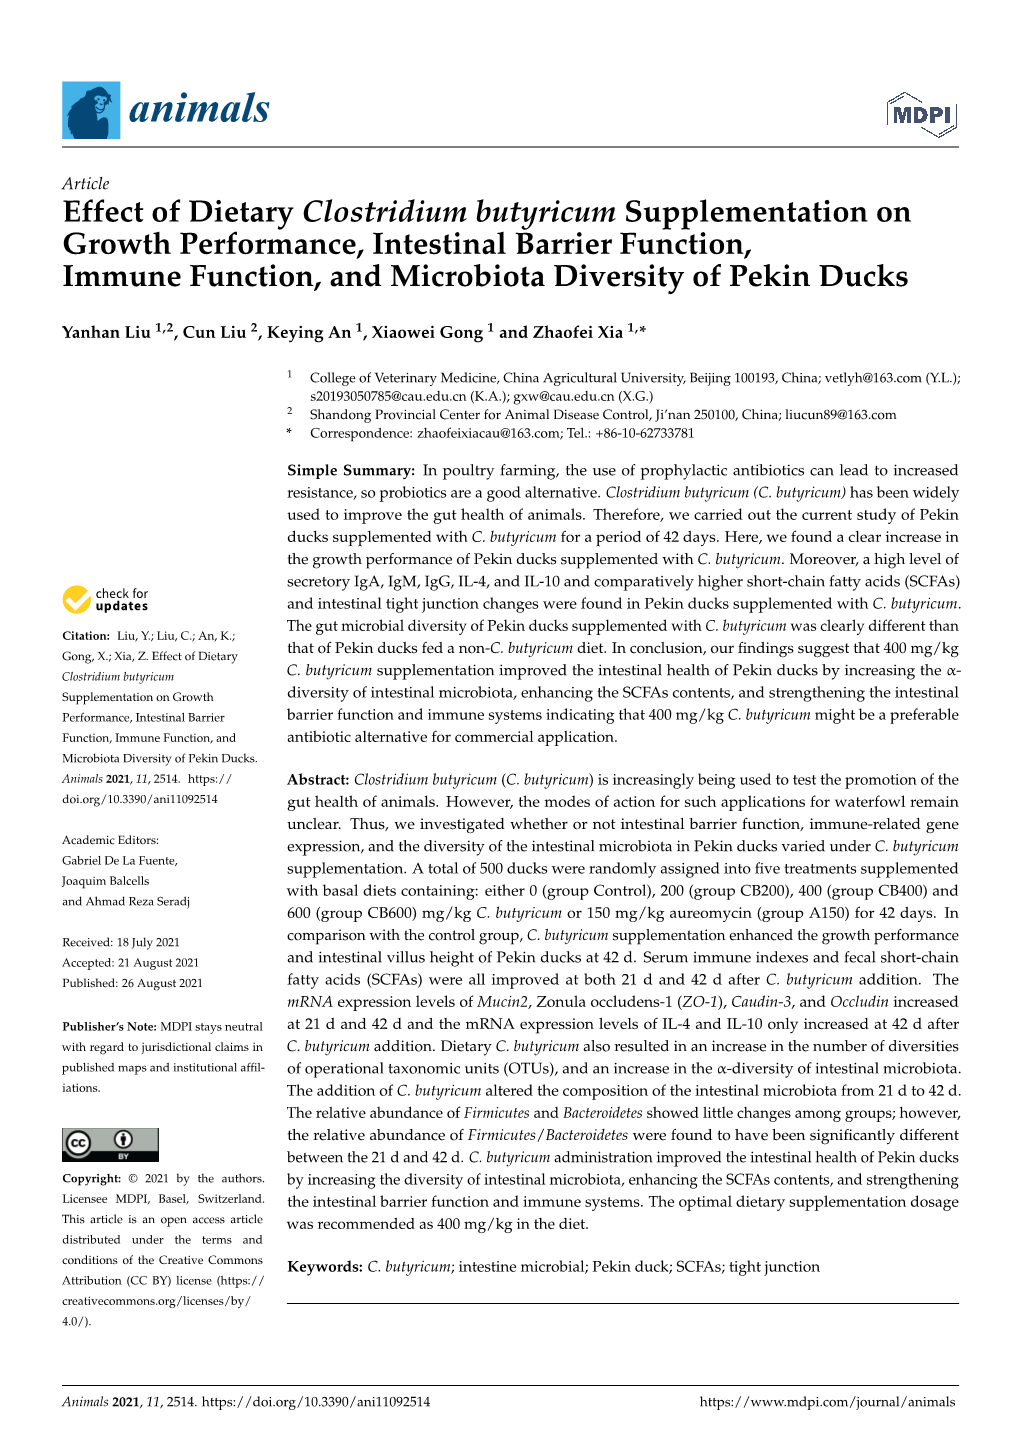 Effect of Dietary Clostridium Butyricum Supplementation on Growth Performance, Intestinal Barrier Function, Immune Function, and Microbiota Diversity of Pekin Ducks